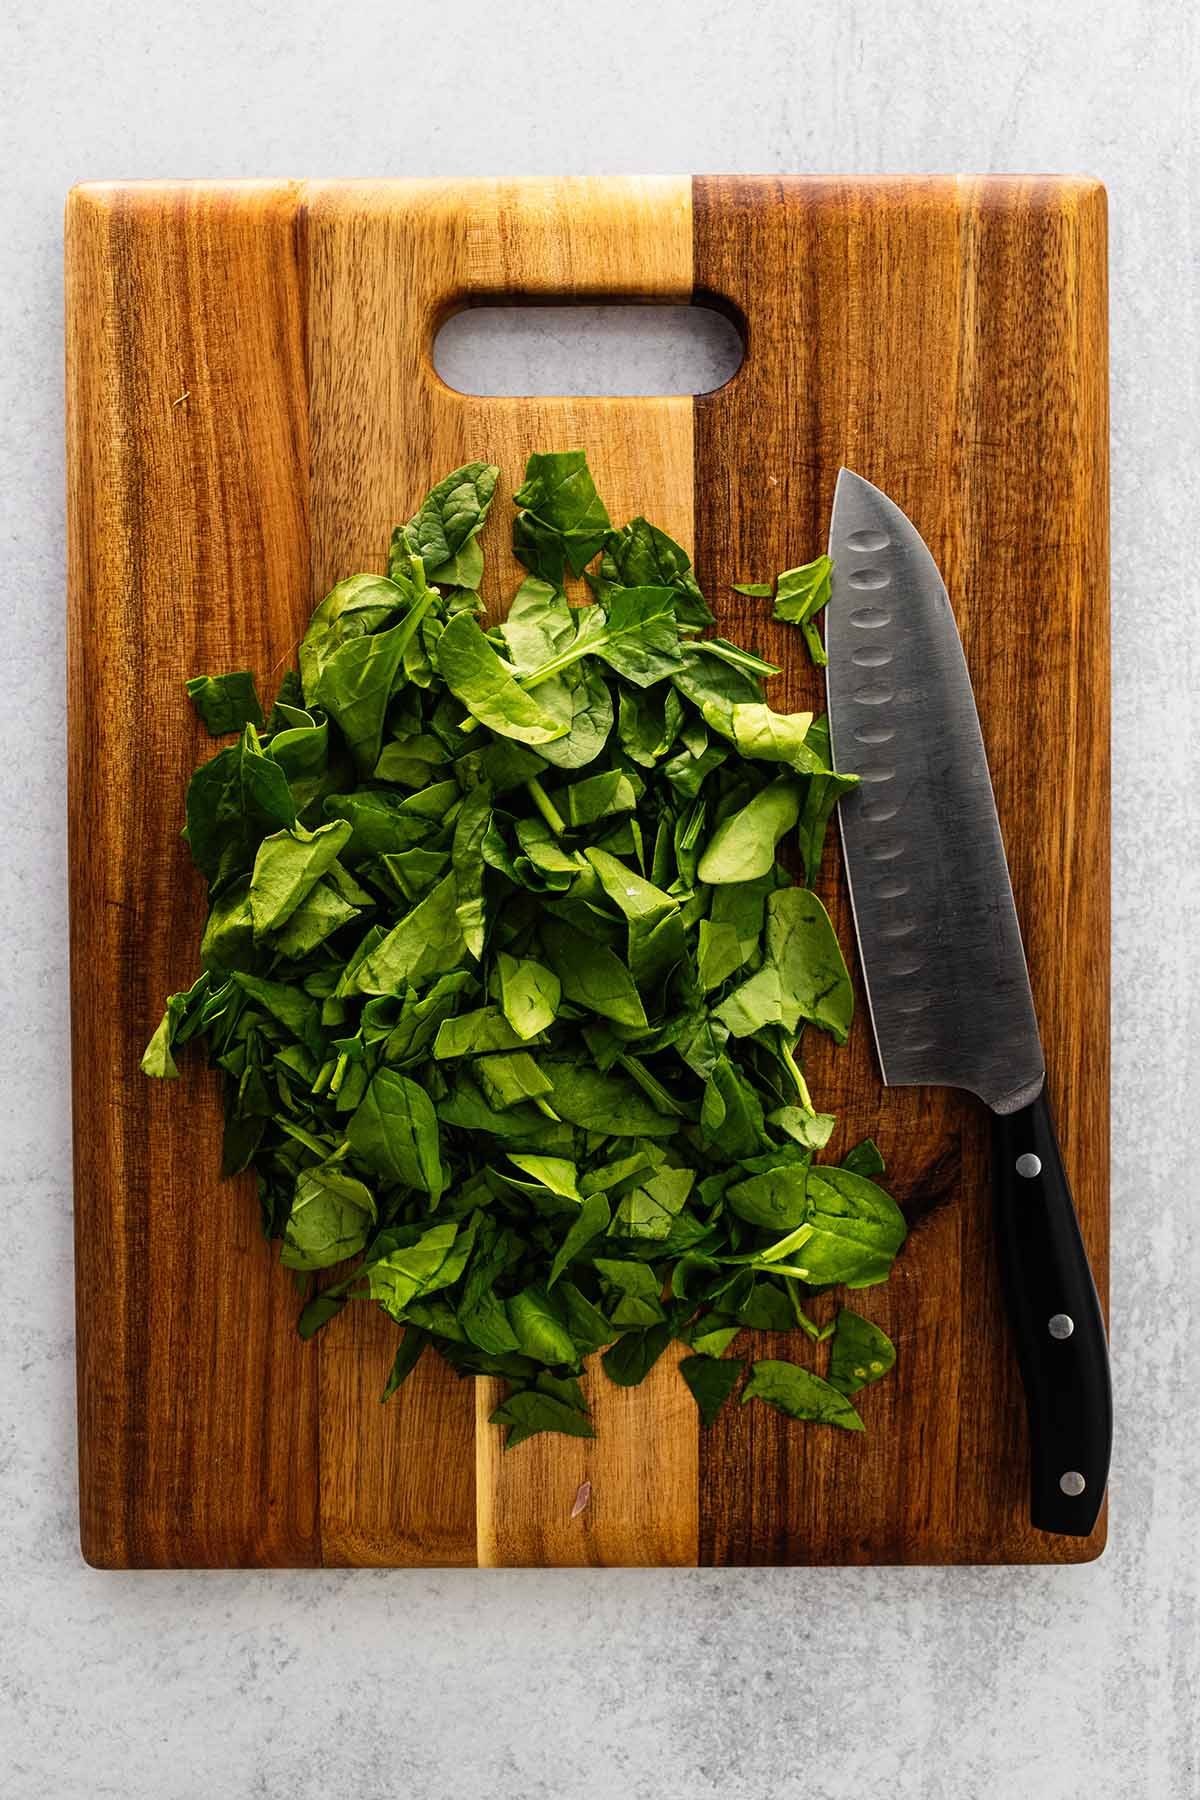 Chopped spinach on a wood cutting board.